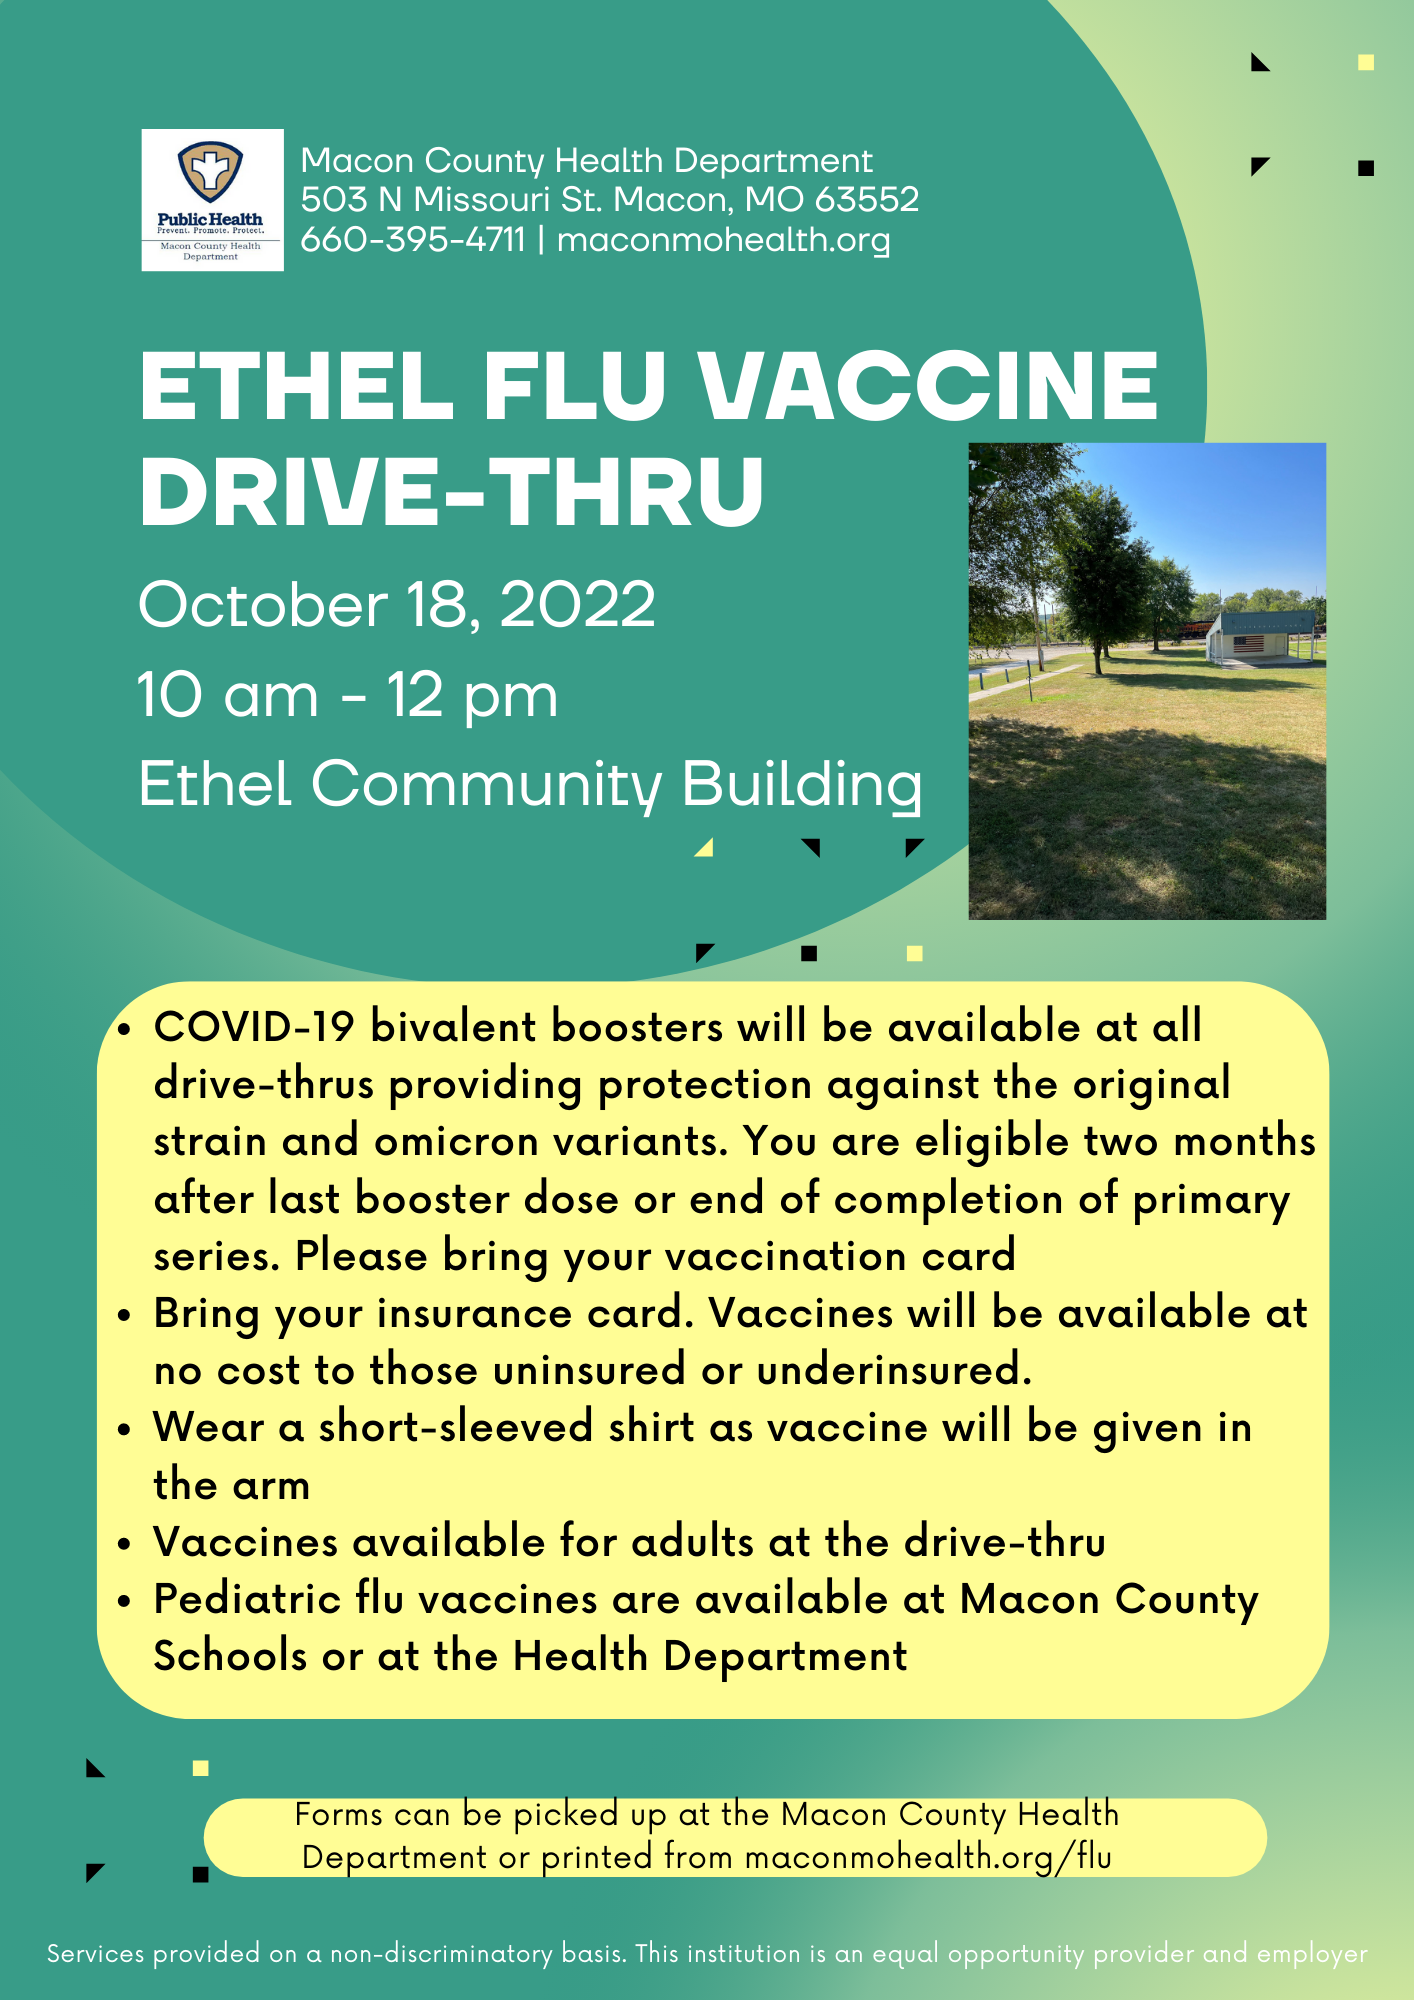 Ethel Flu Vaccine Drive-Thru @ Ethel Community Building